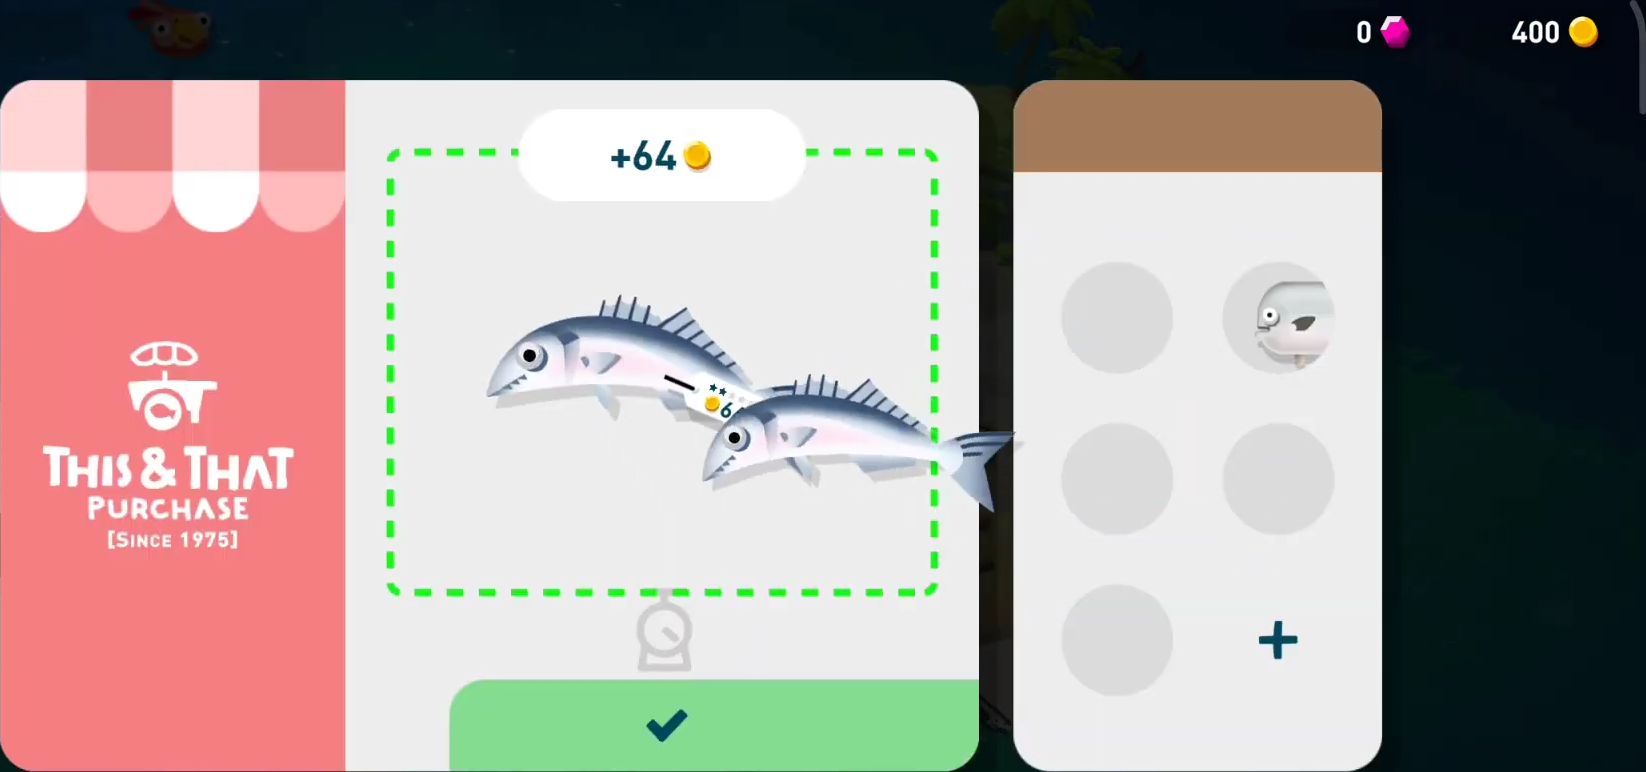 Télécharger Creatures of the Deep: Fishing pour Android gratuit.